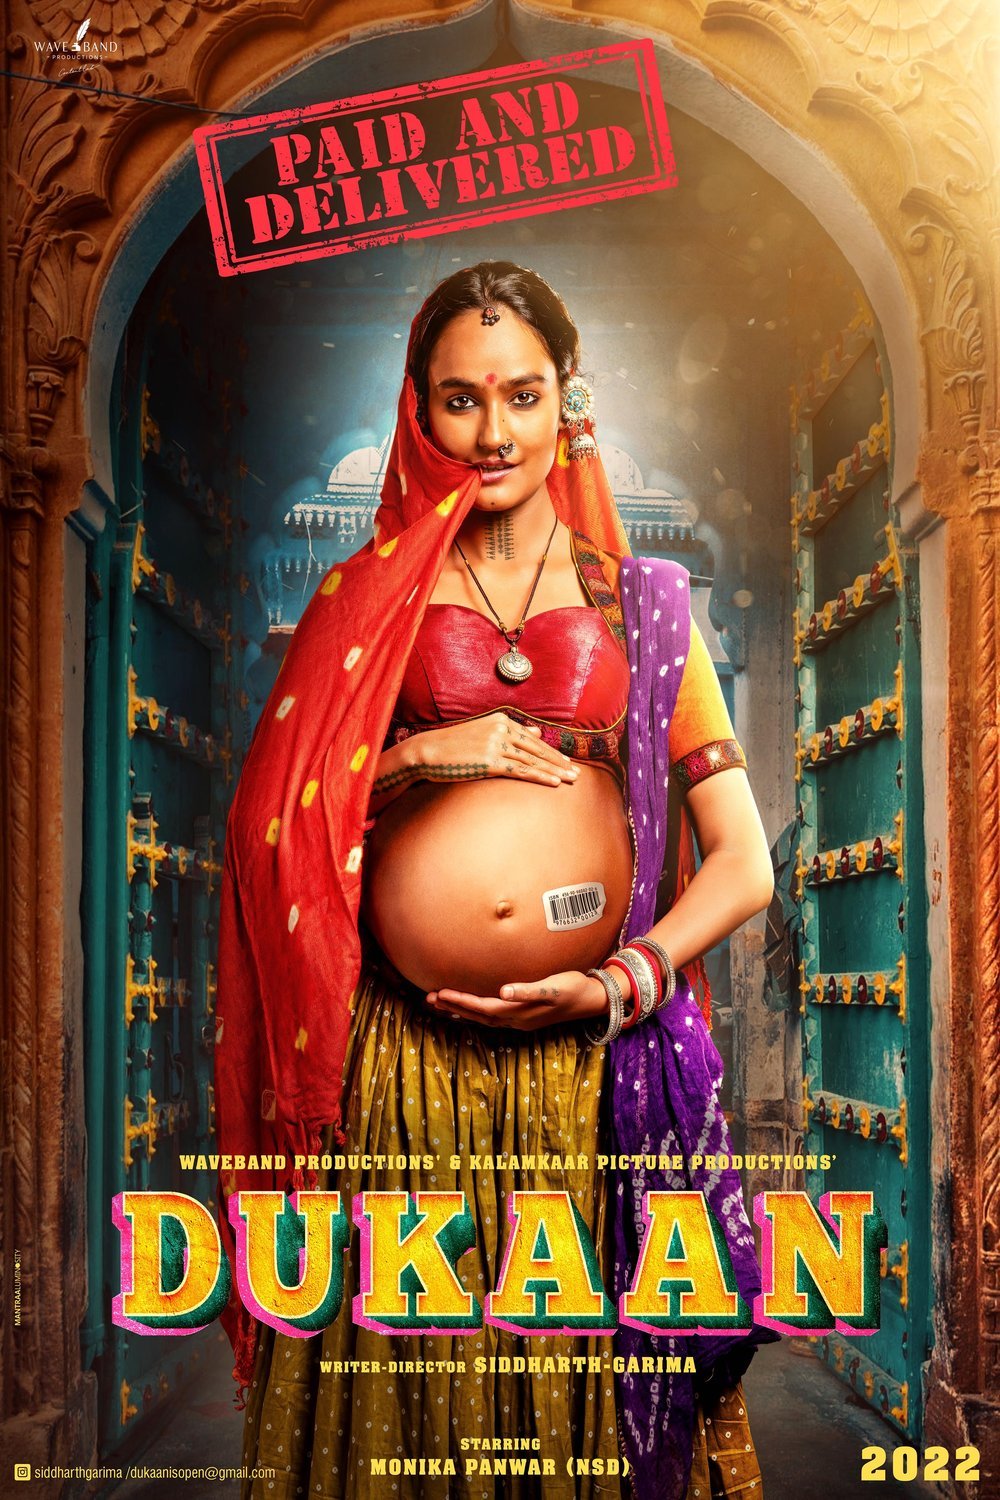 Hindi poster of the movie Dukaan